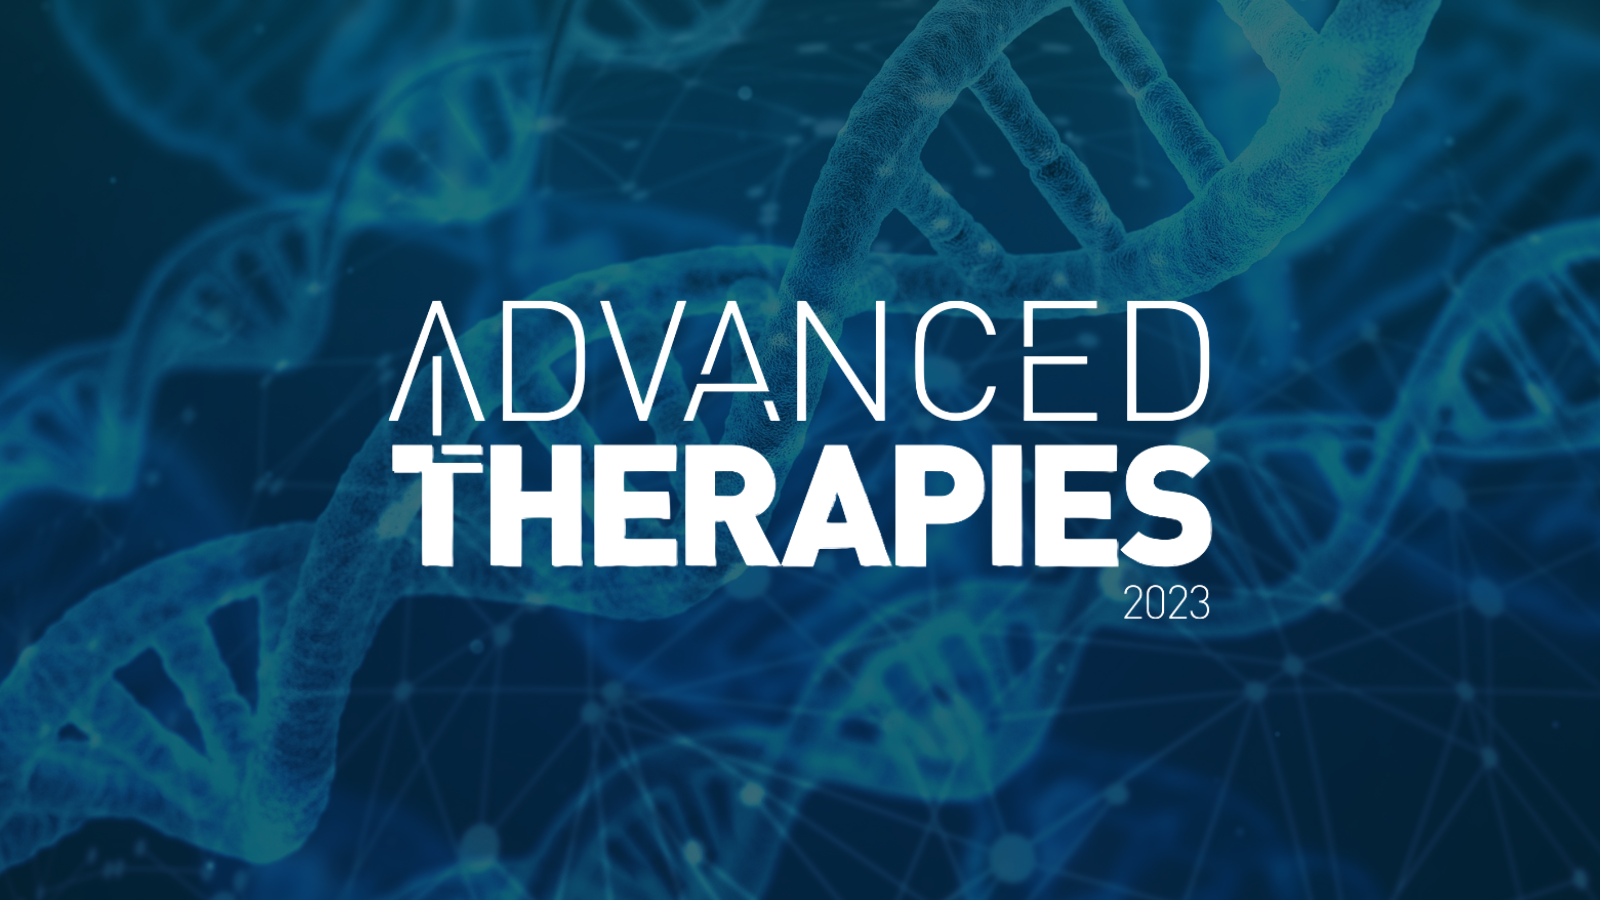 Advanced Therapies event logo